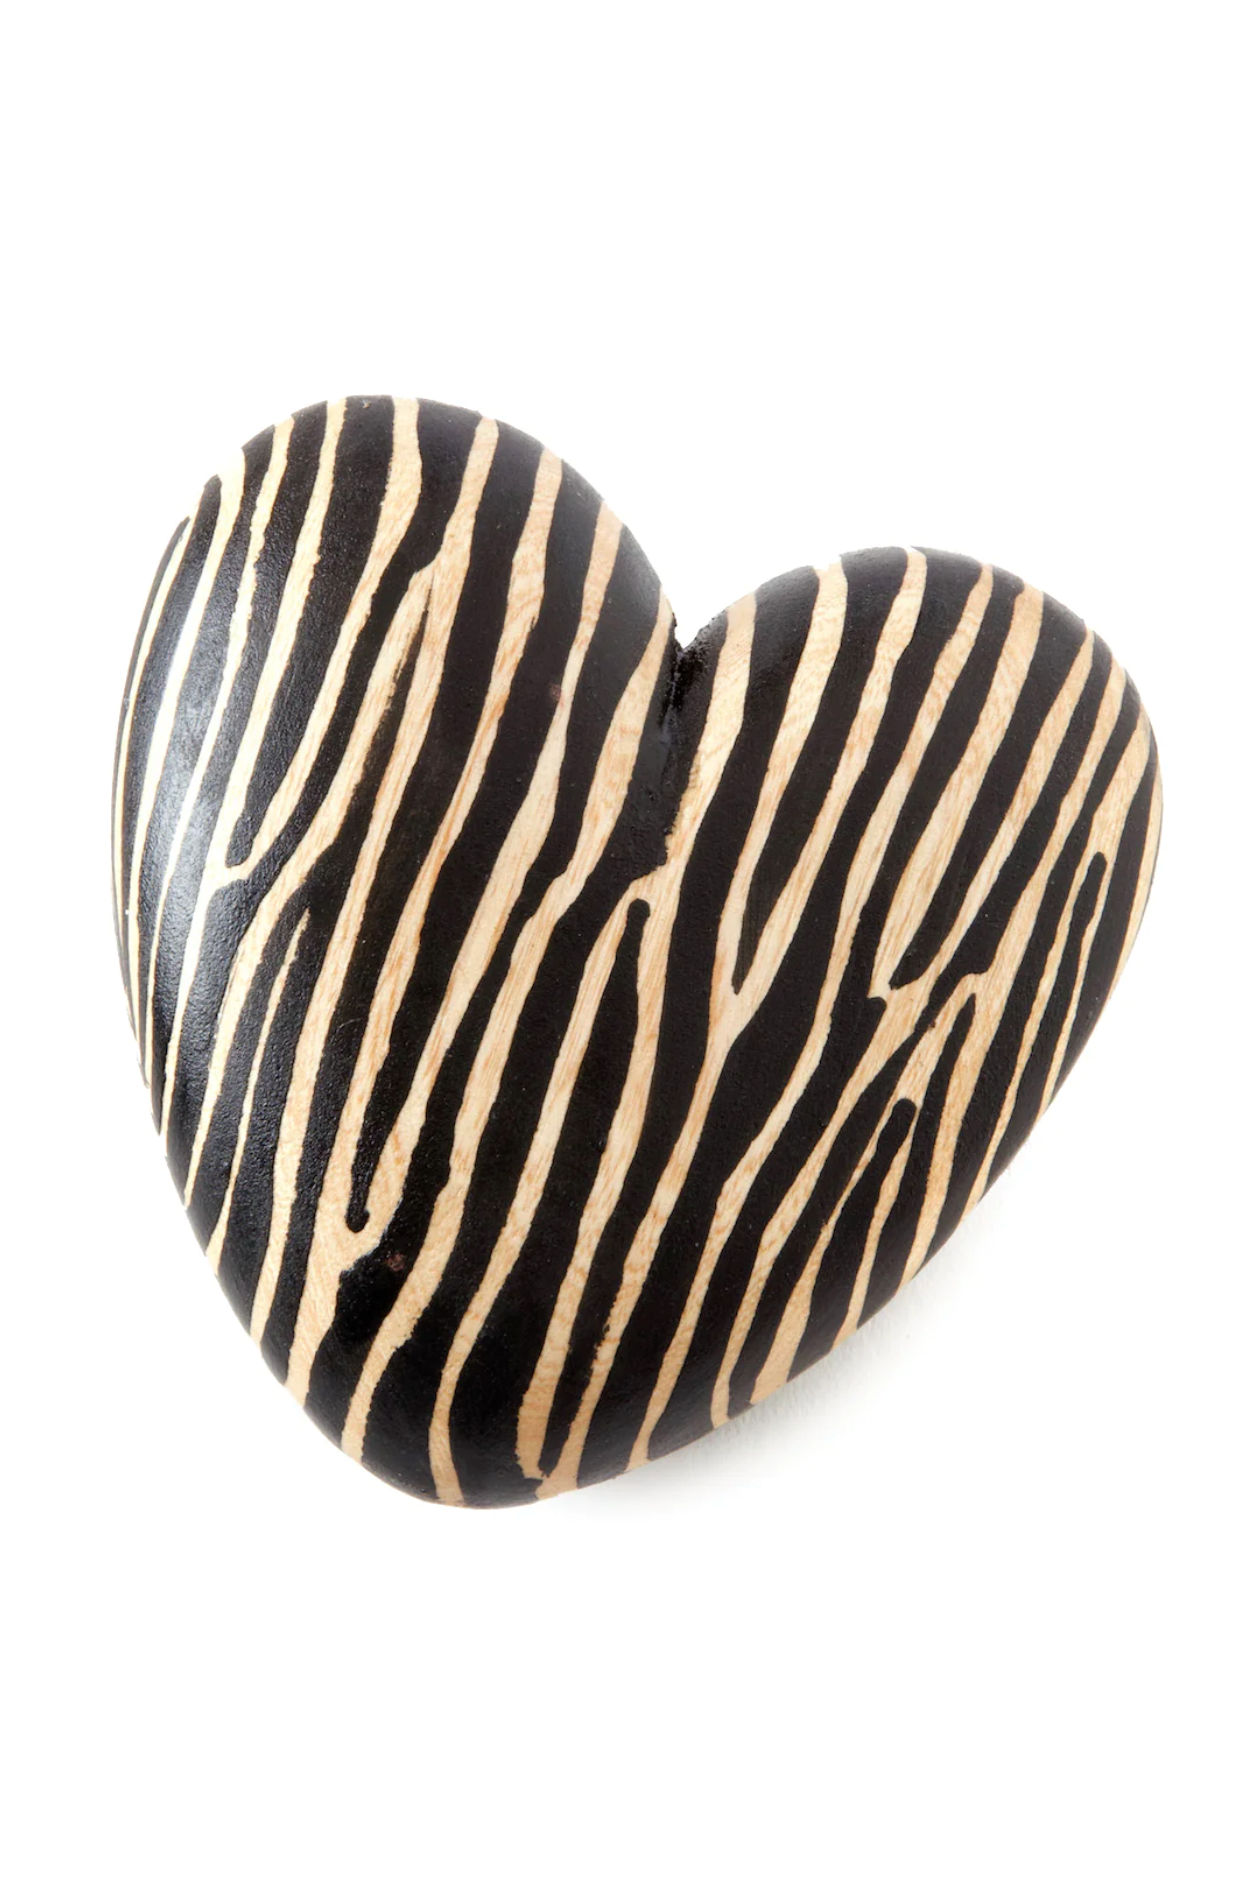 Jacaranda Wood Zebra Print Heart